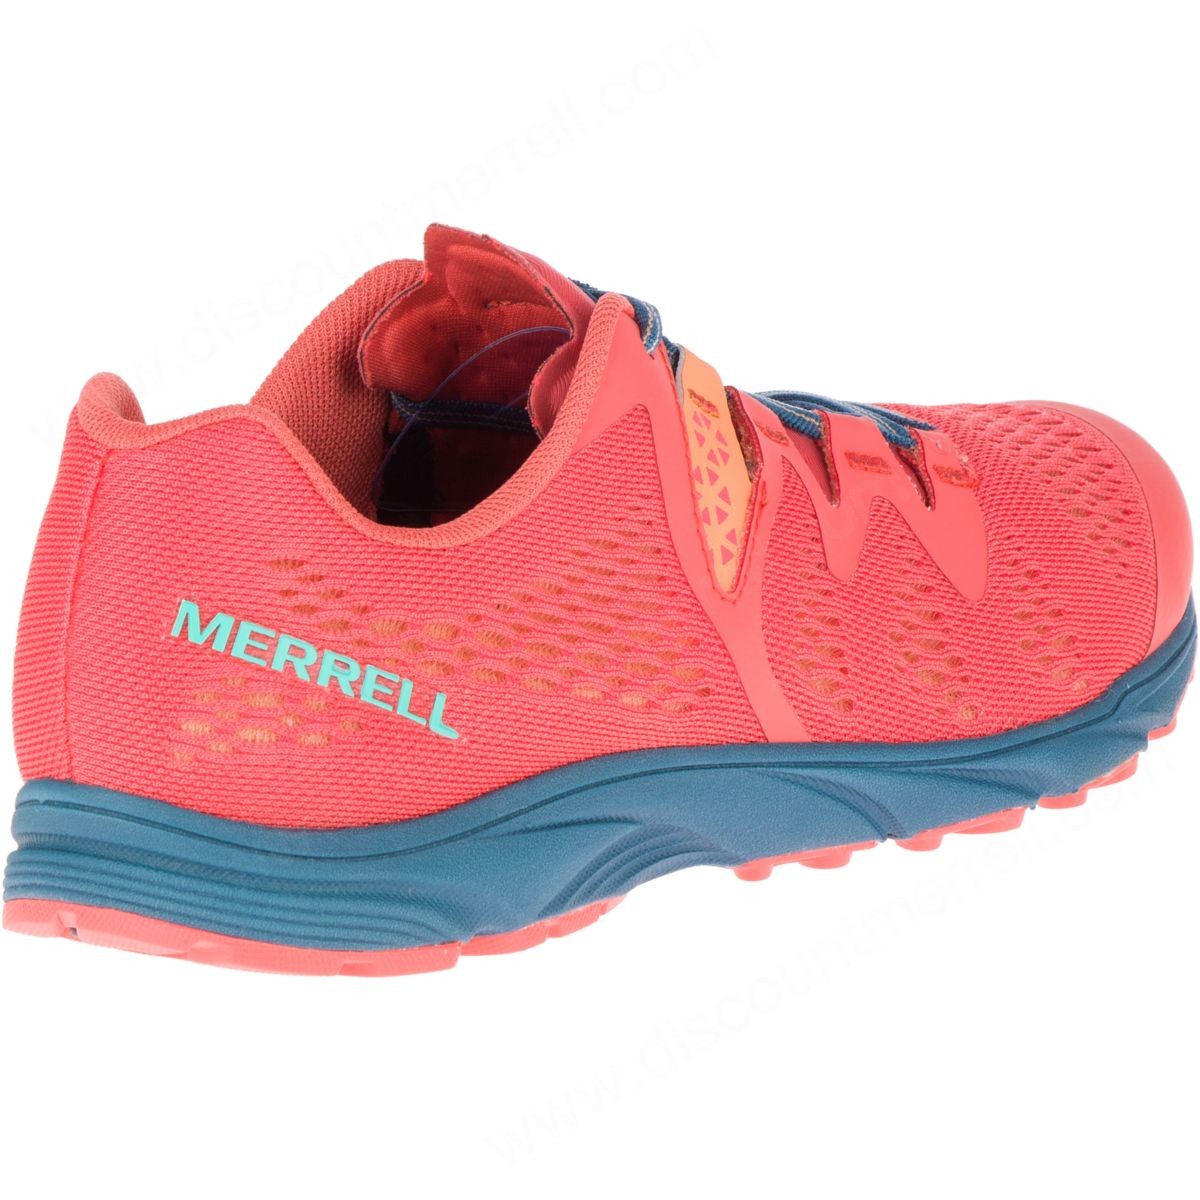 Merrell Women's Riveter E-Mesh Hot Coral - -7